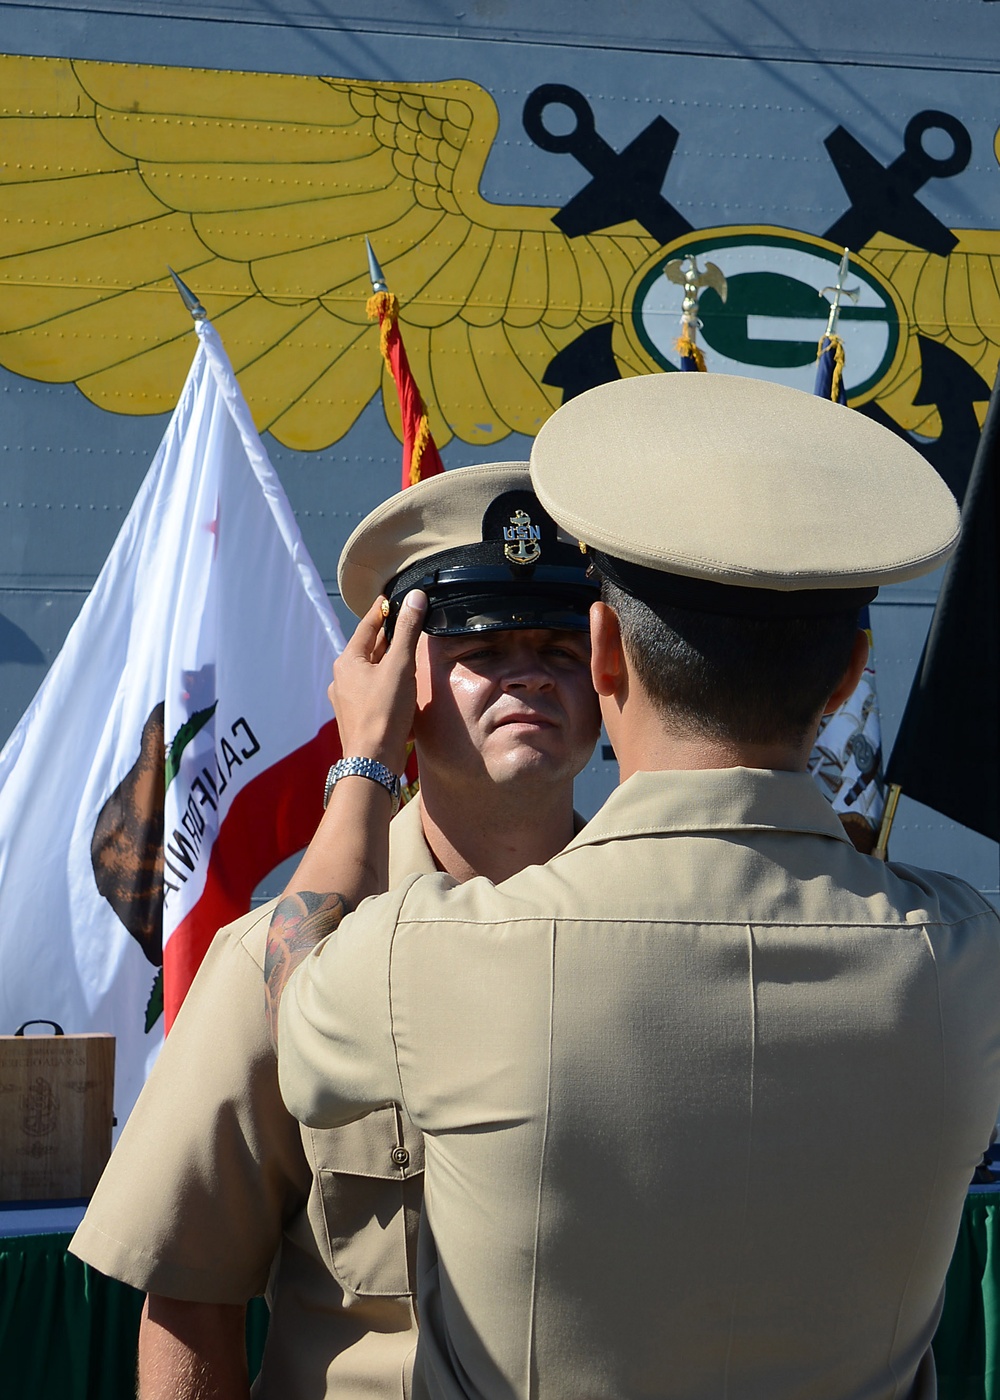 USS Green Bay CPO pinning ceremony